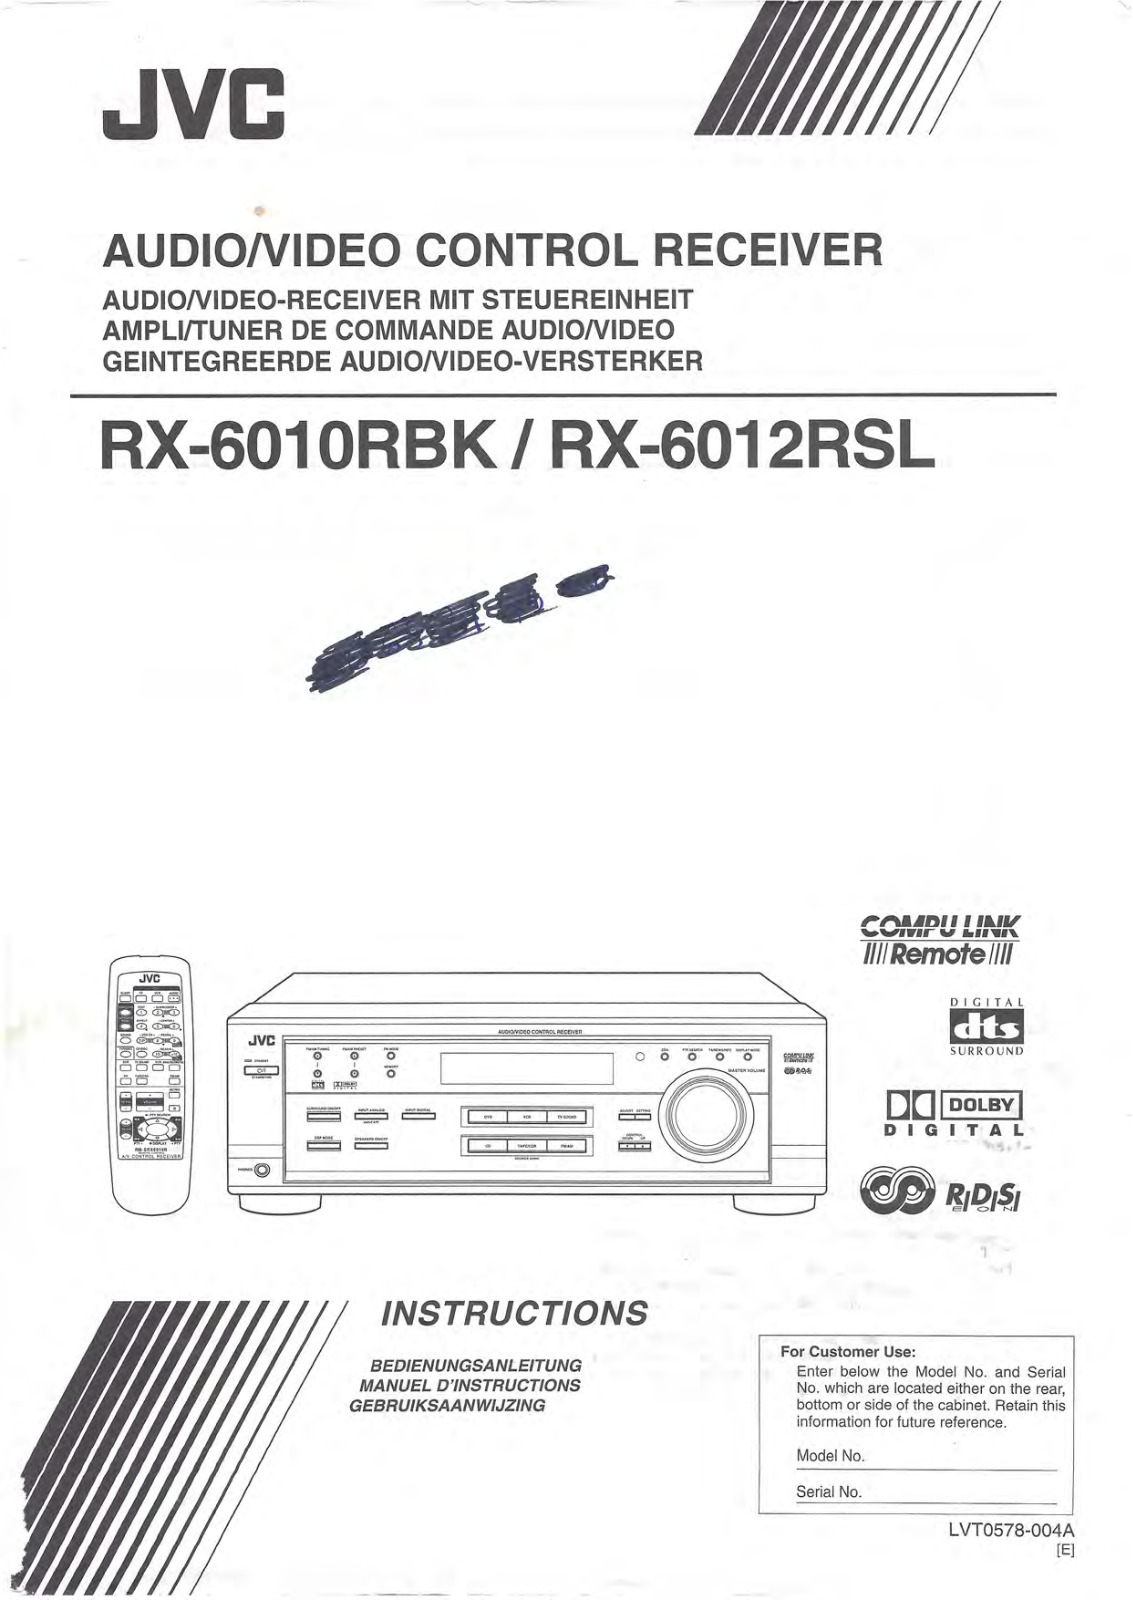 JVC RX-6012R User Manual